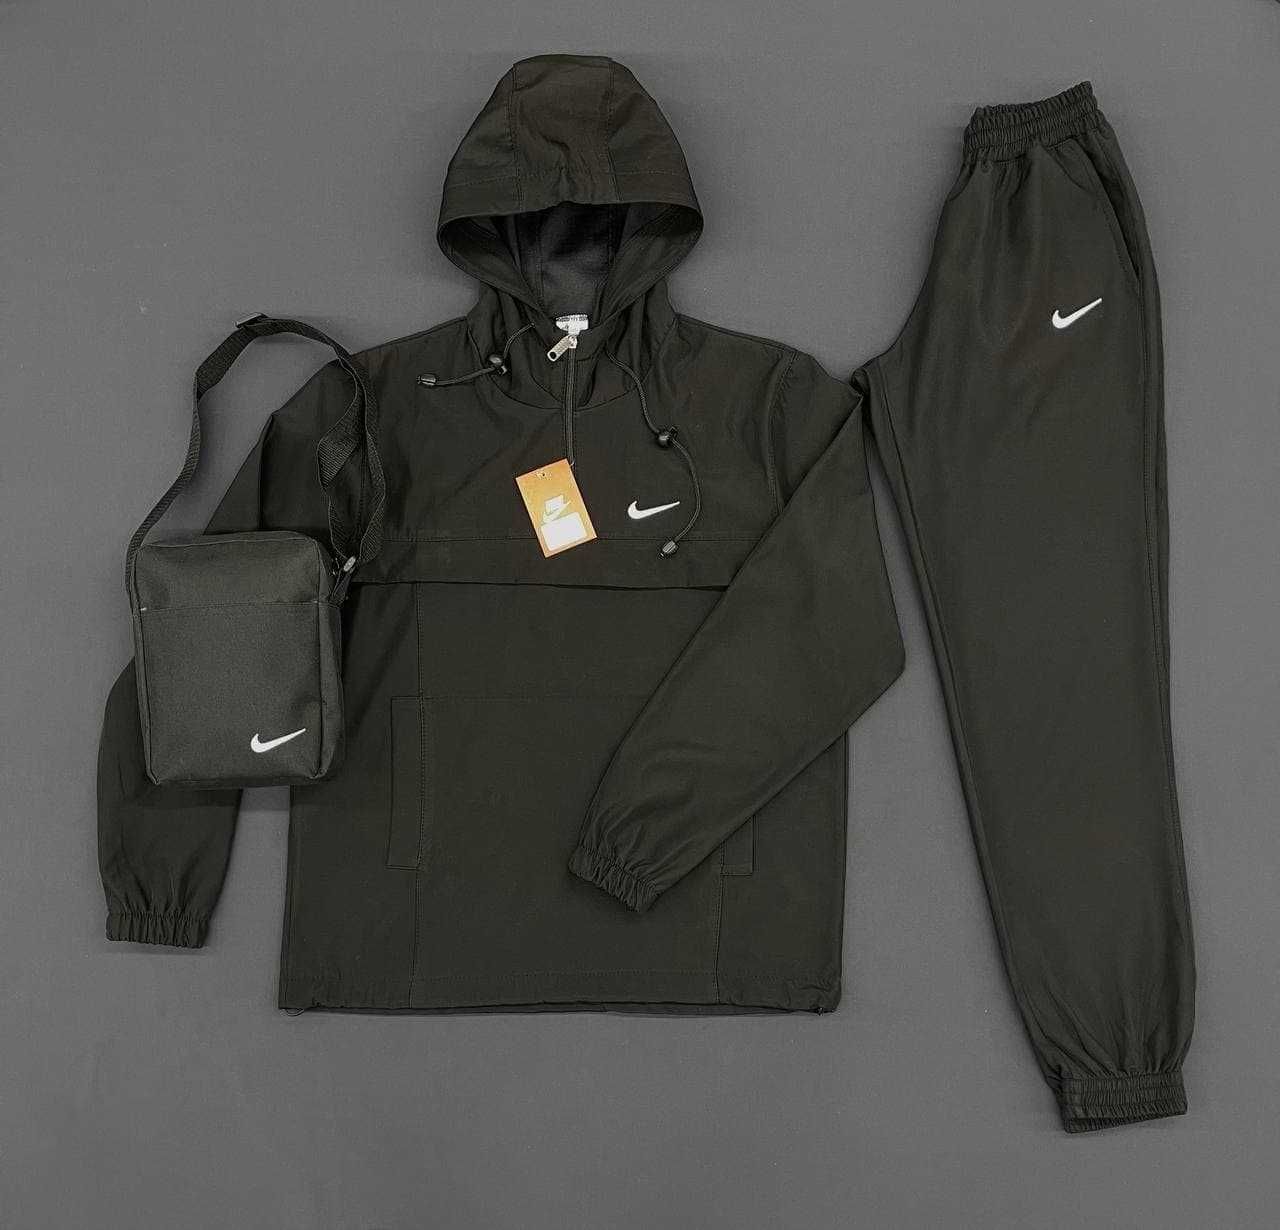 Спортивный костюм мужской Nike Анорак (куртка)  Штаны осенний весенний